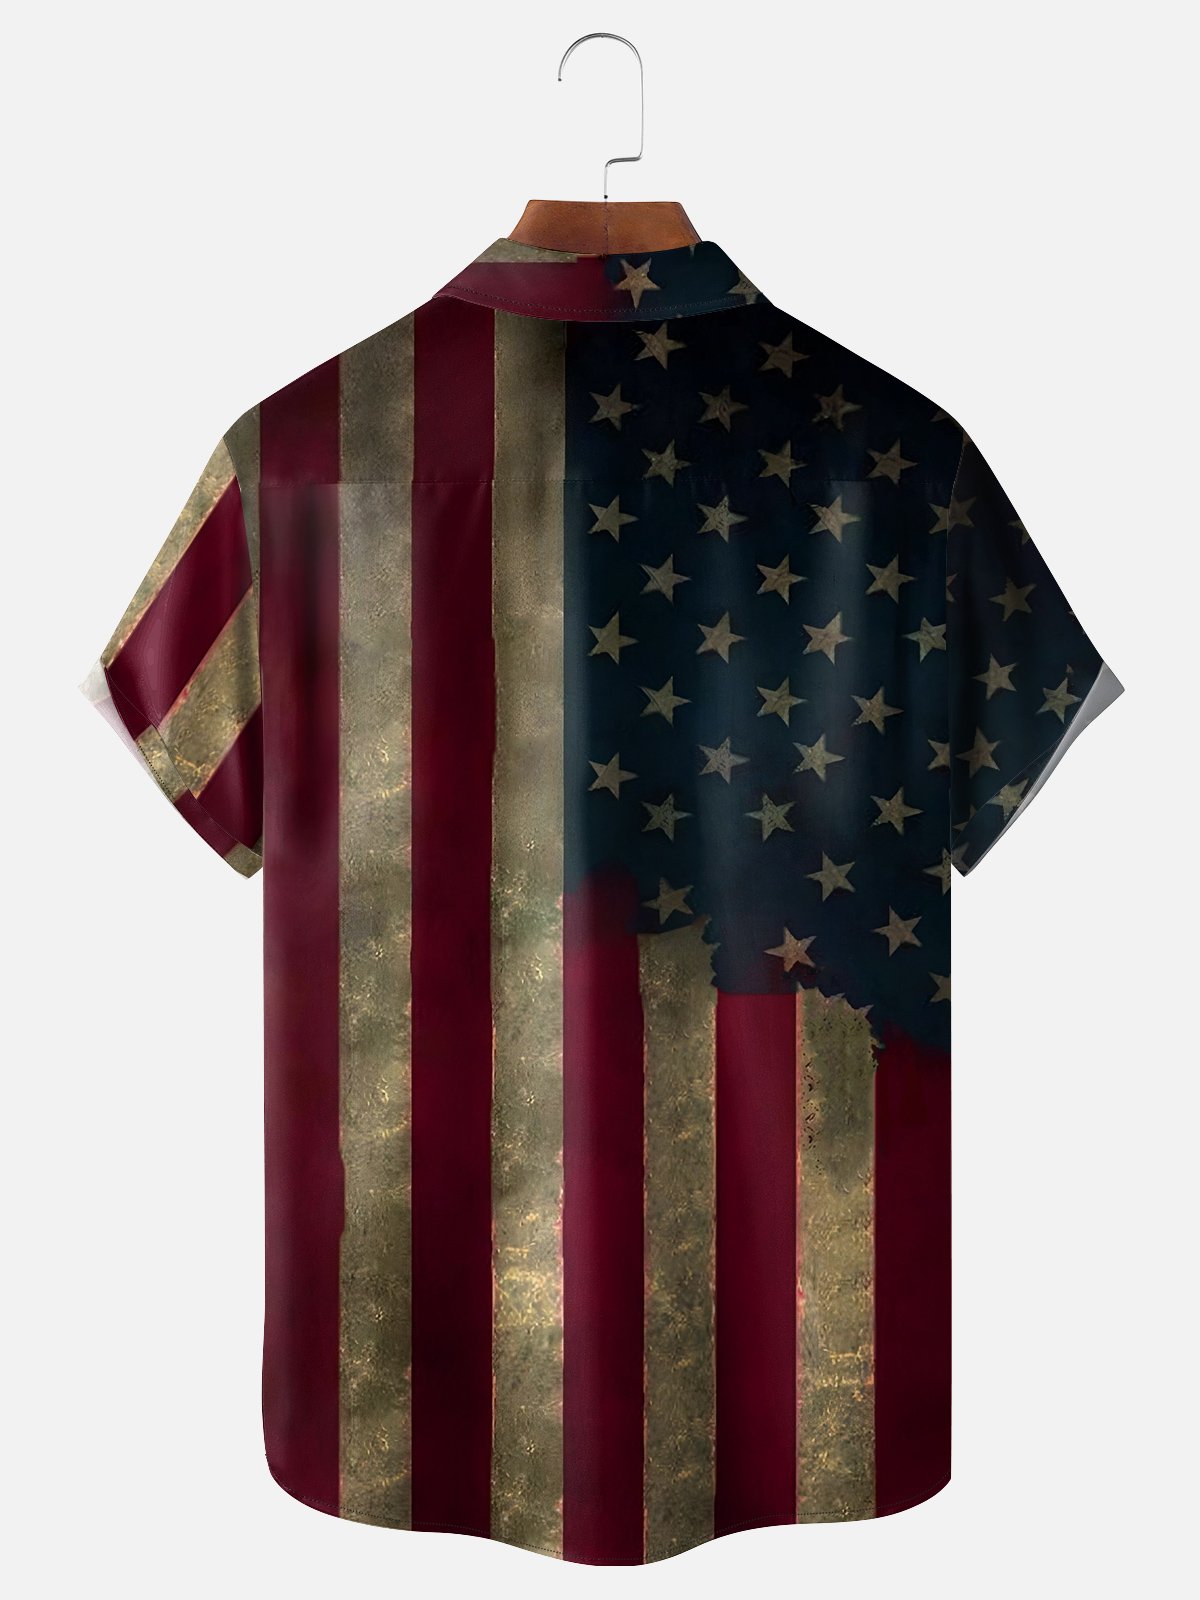 Vintage Car National Patriotic American Flag Breathable Hawaiian Shirt